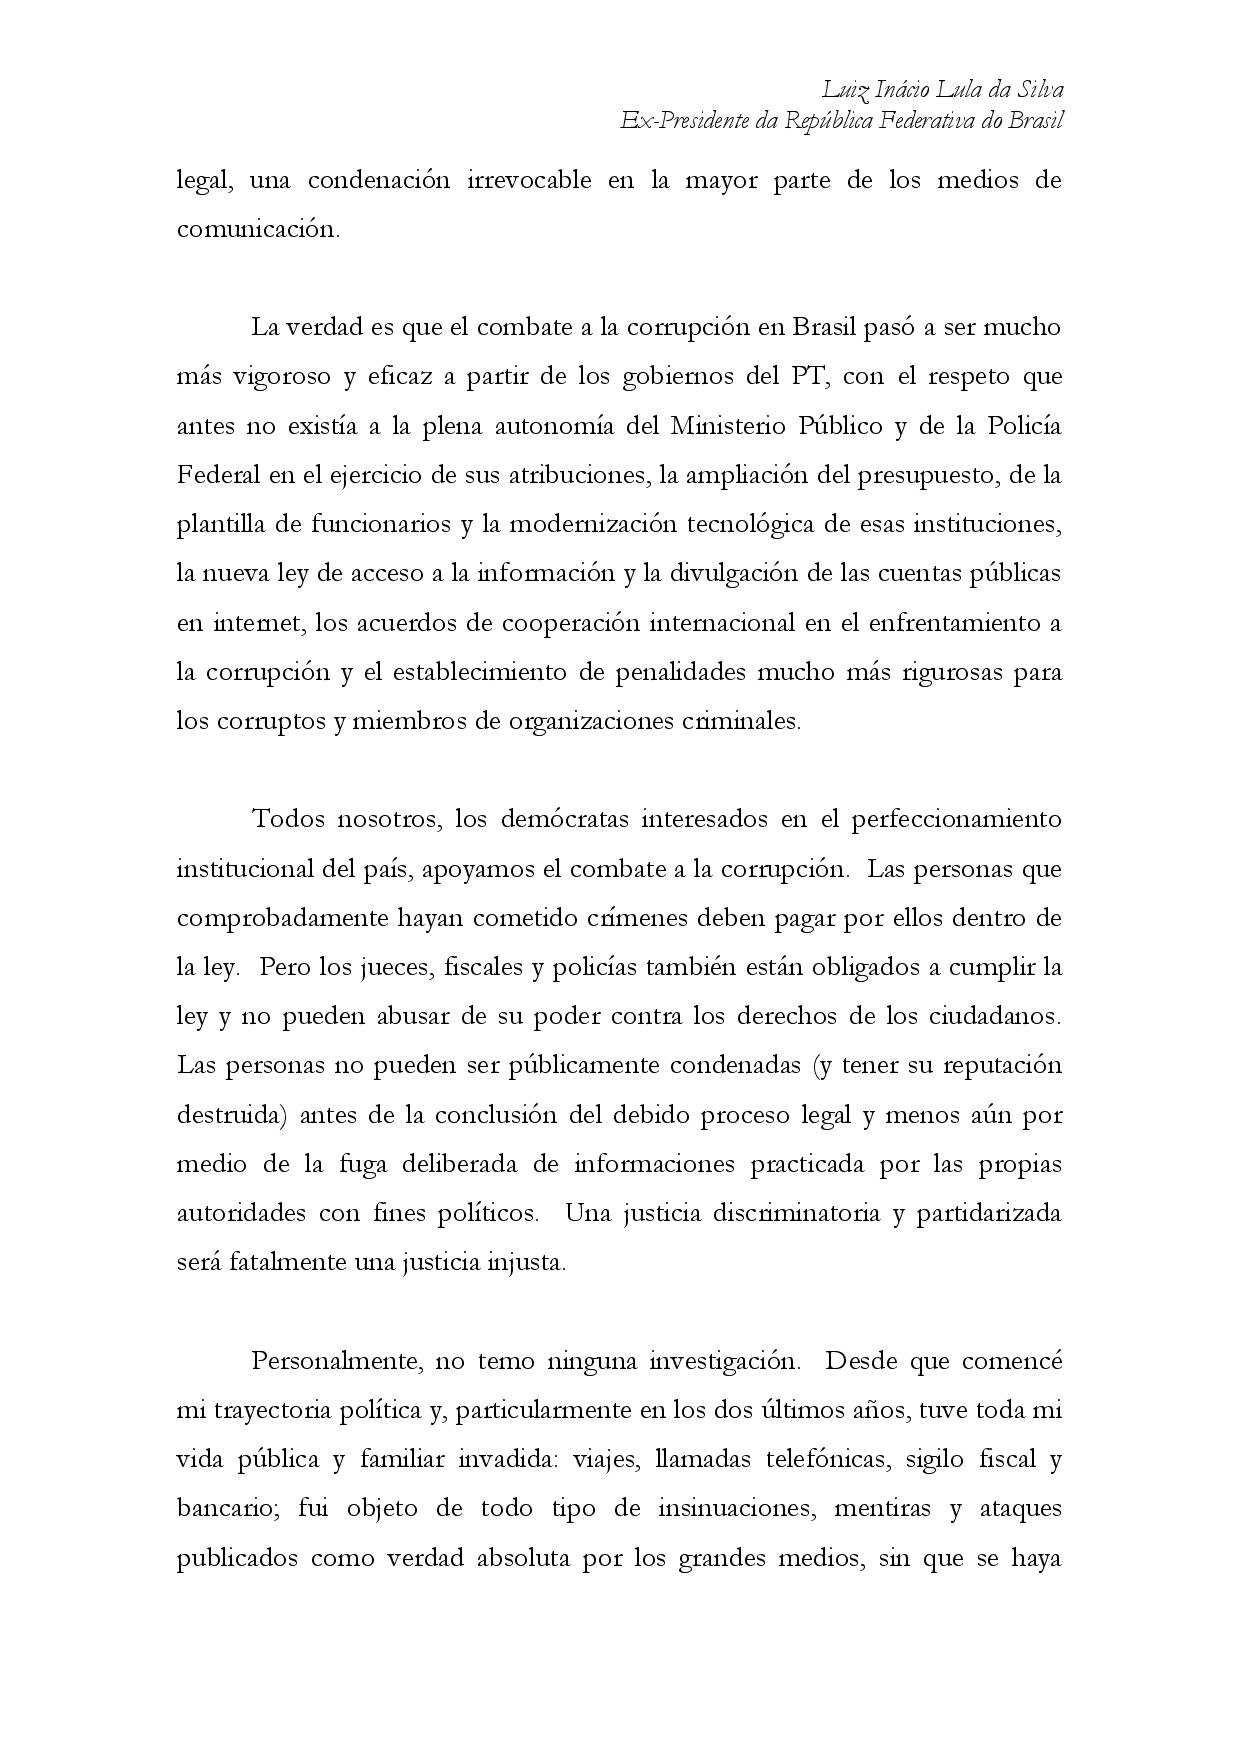 Argentina Ex-presidenta-page-005